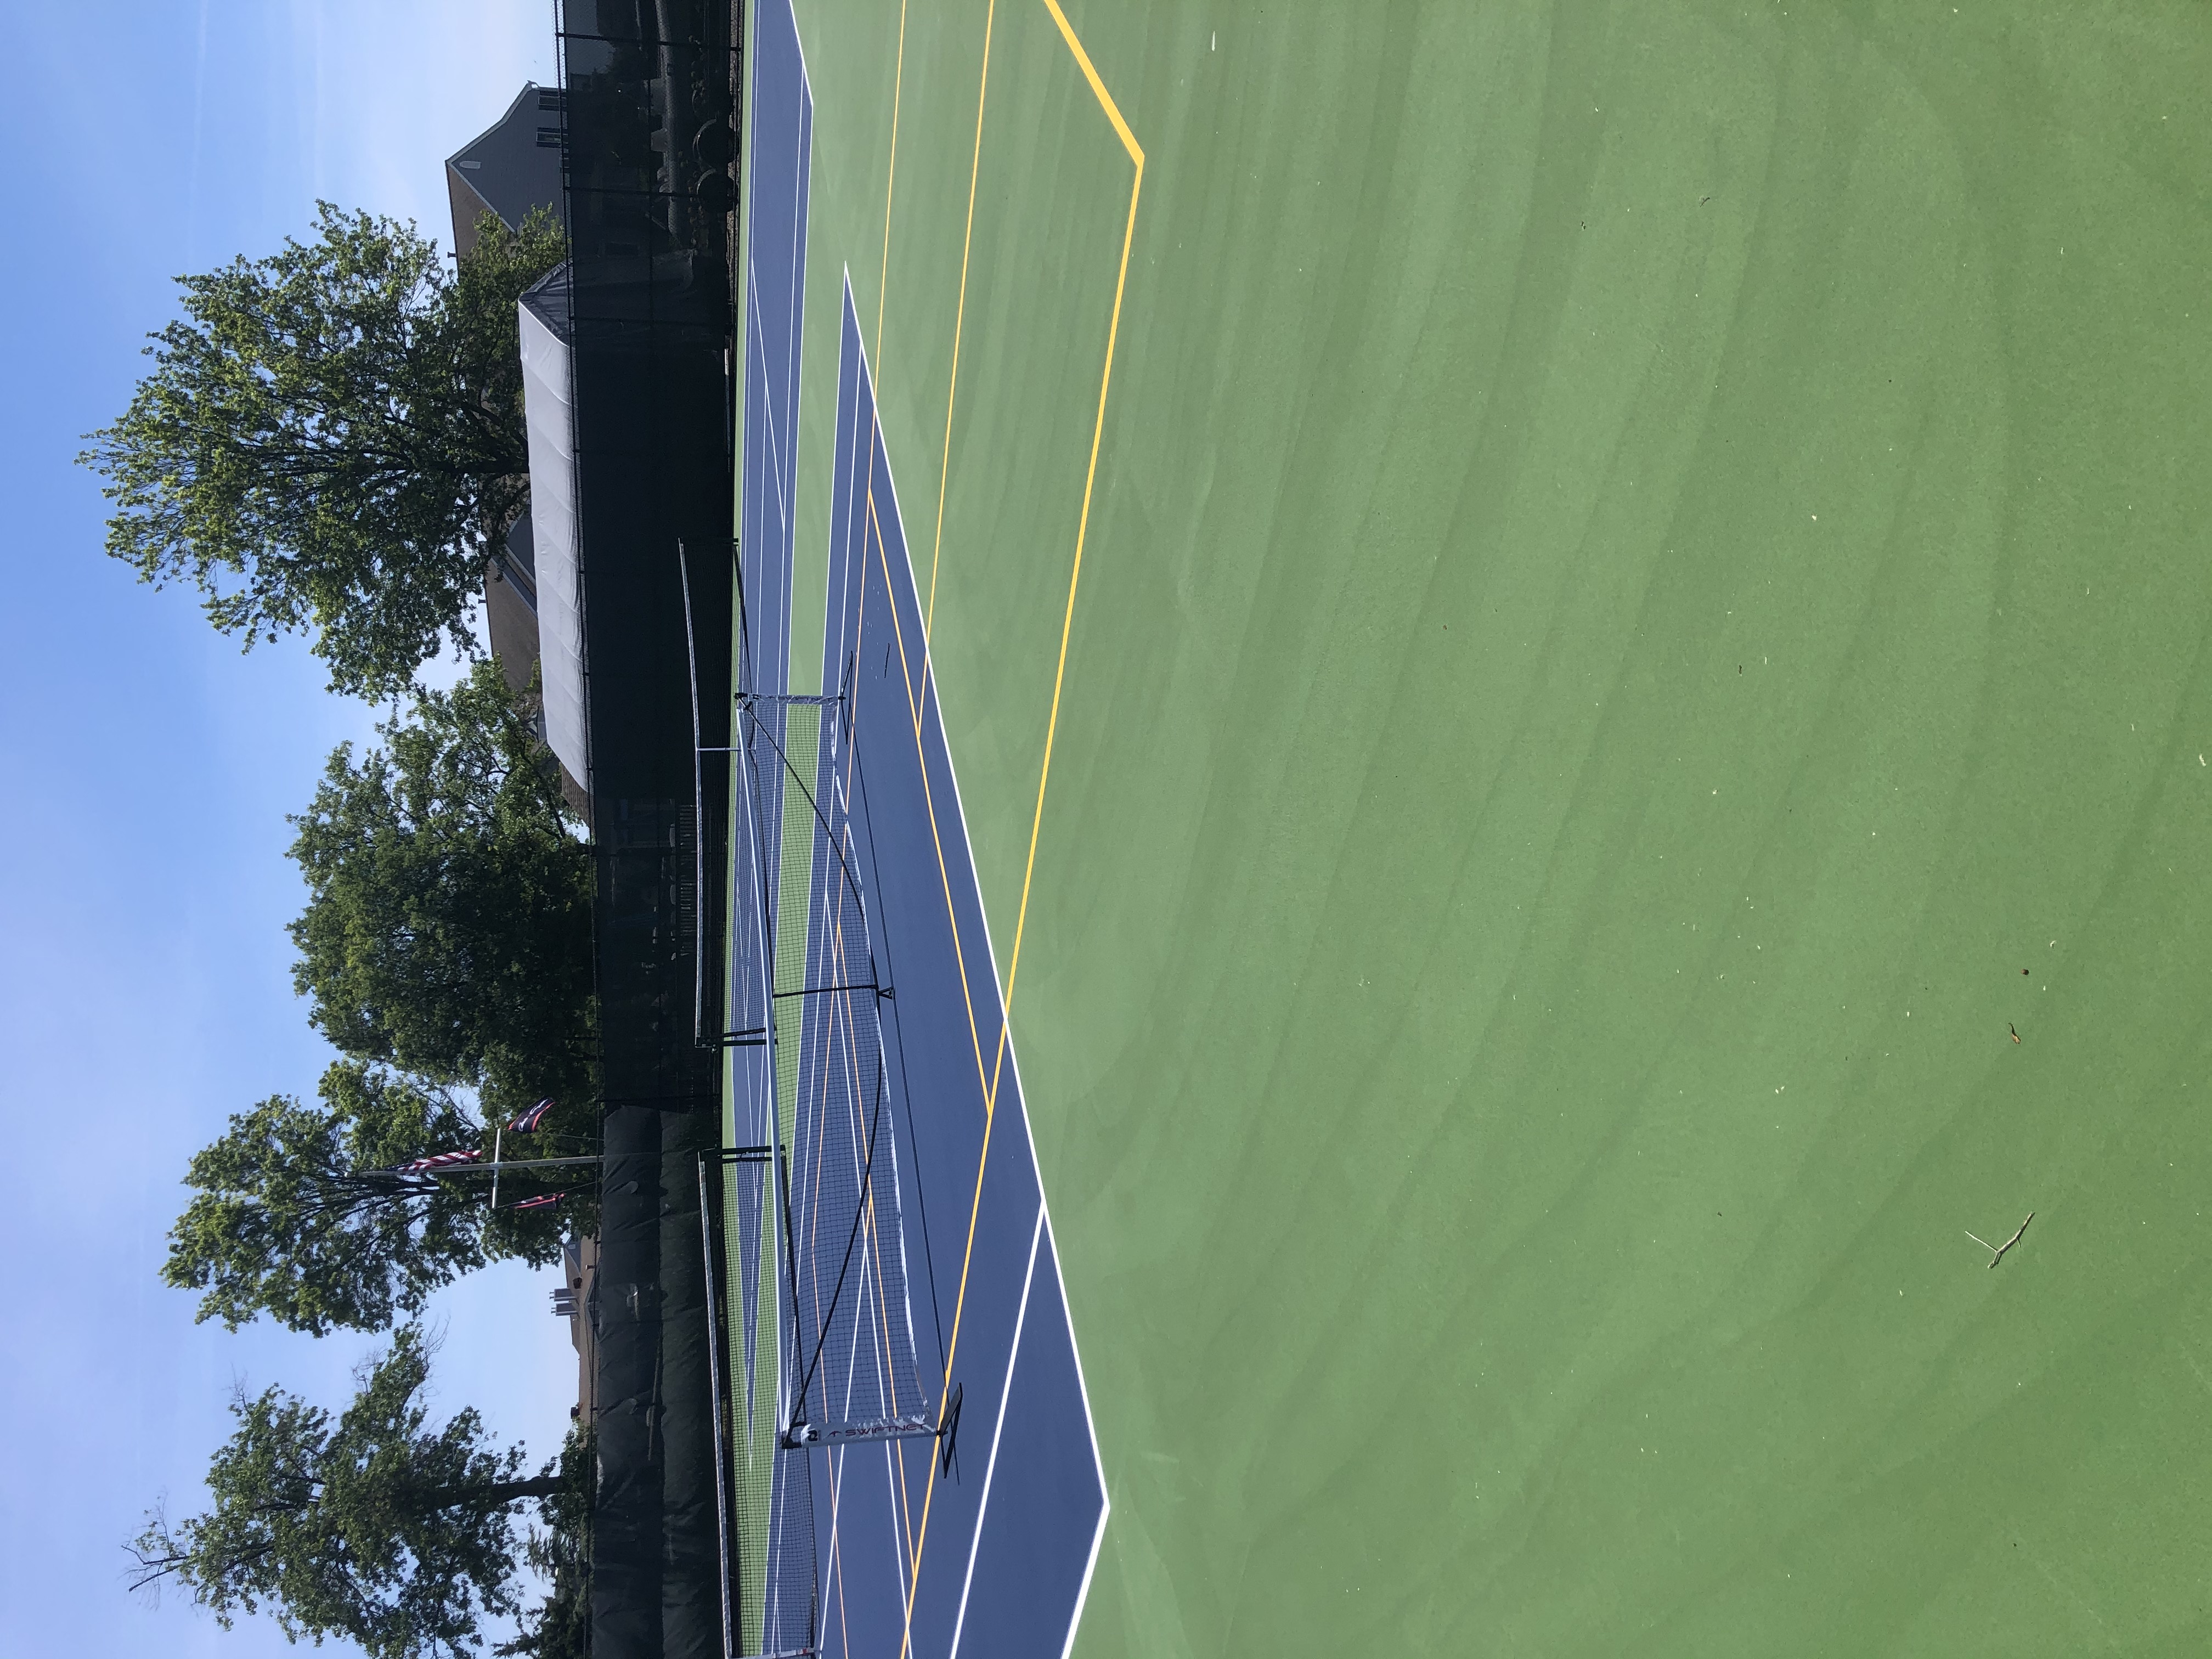 Tennis Courts 2